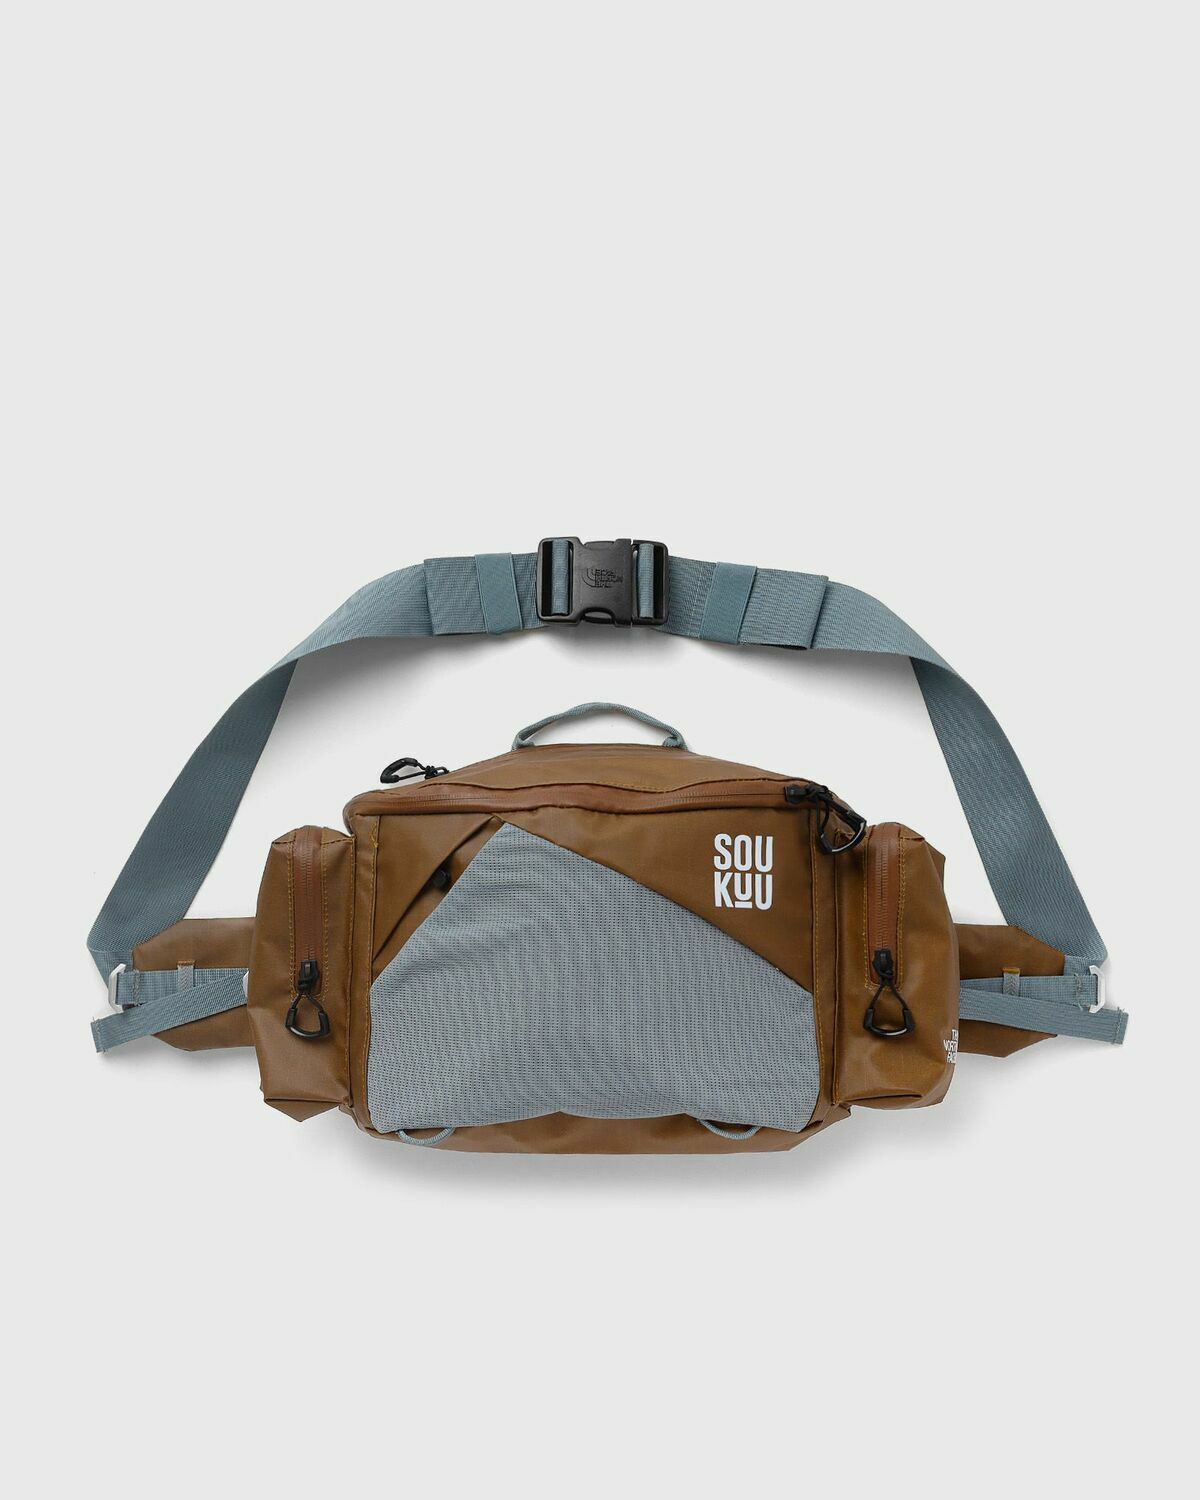 The North Face Eco Trail Sleeping Bag x Online Ceramics - A7uii-va3 -  Sneakersnstuff (SNS)